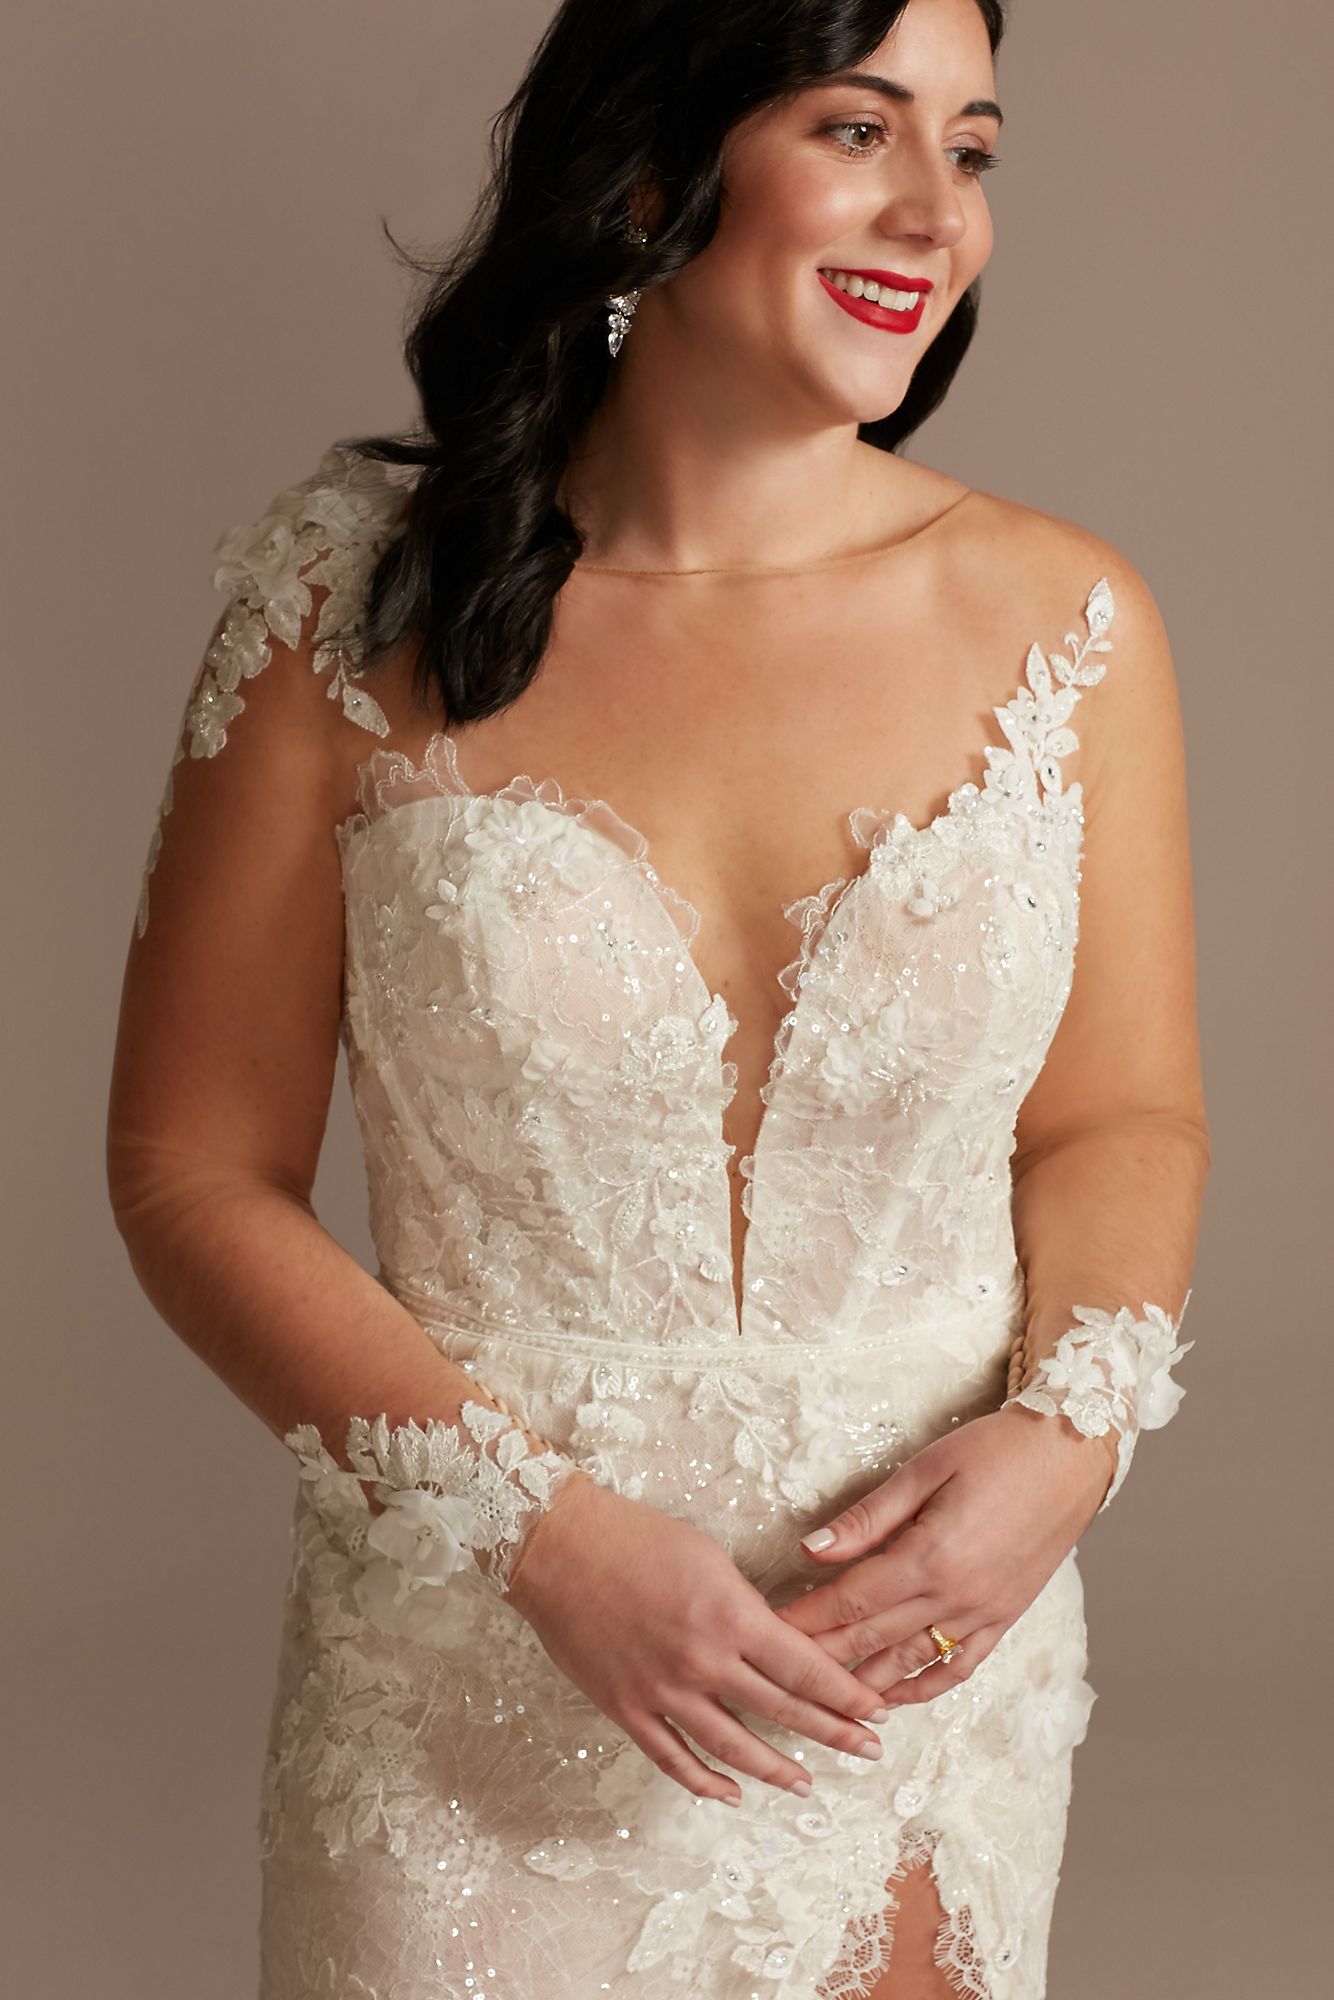 3D Floral Applique Wedding Dress with High Slit Galina Signature MBSWG886